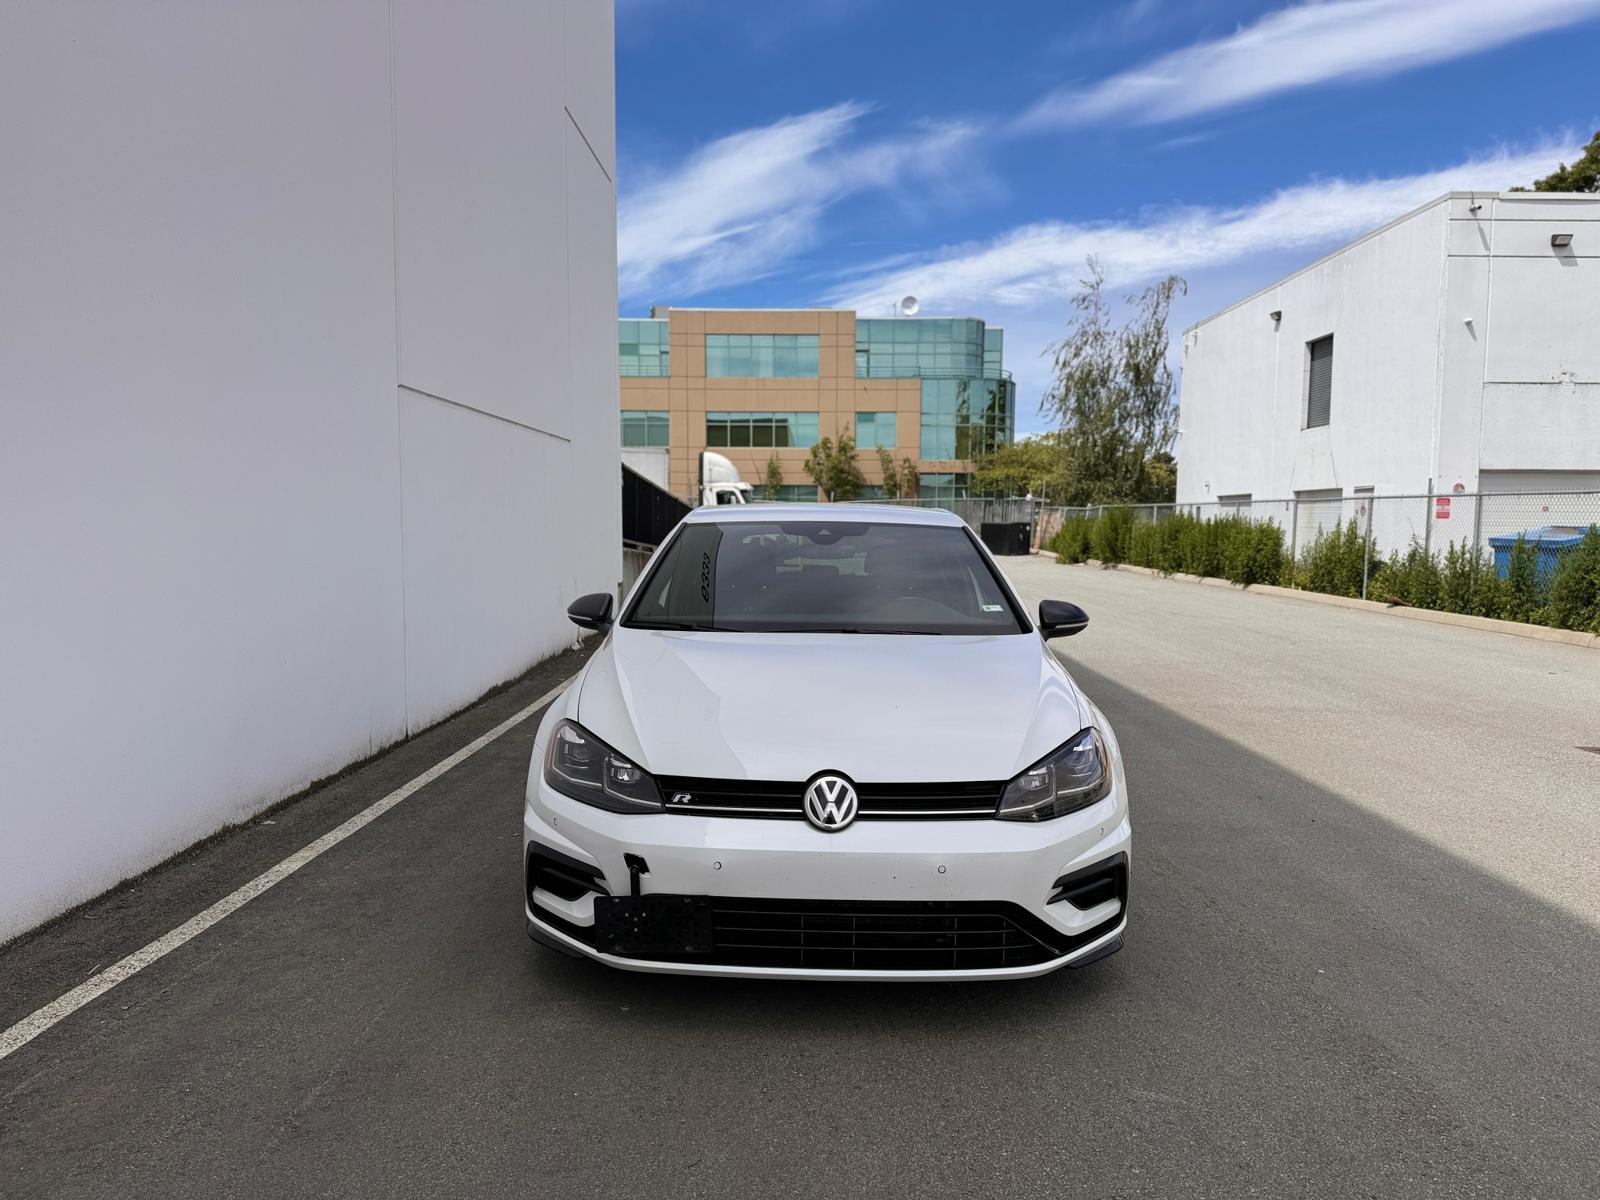 2019 Volkswagen Golf R DCS and Navigation